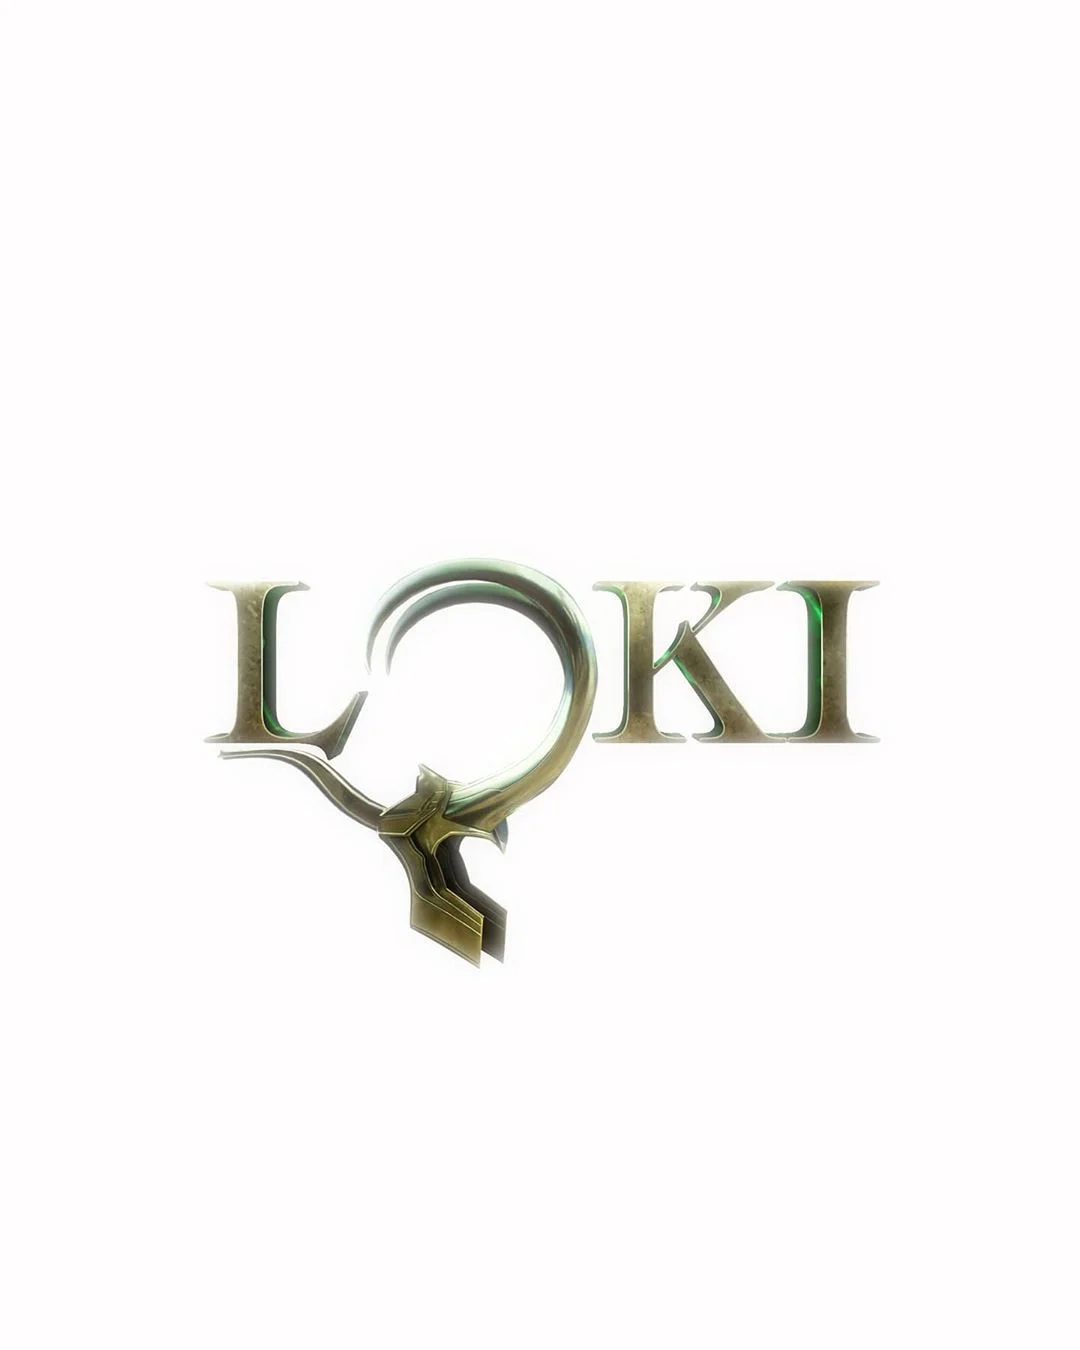 А вот версия логотипа «Локи» в формате постера от него же